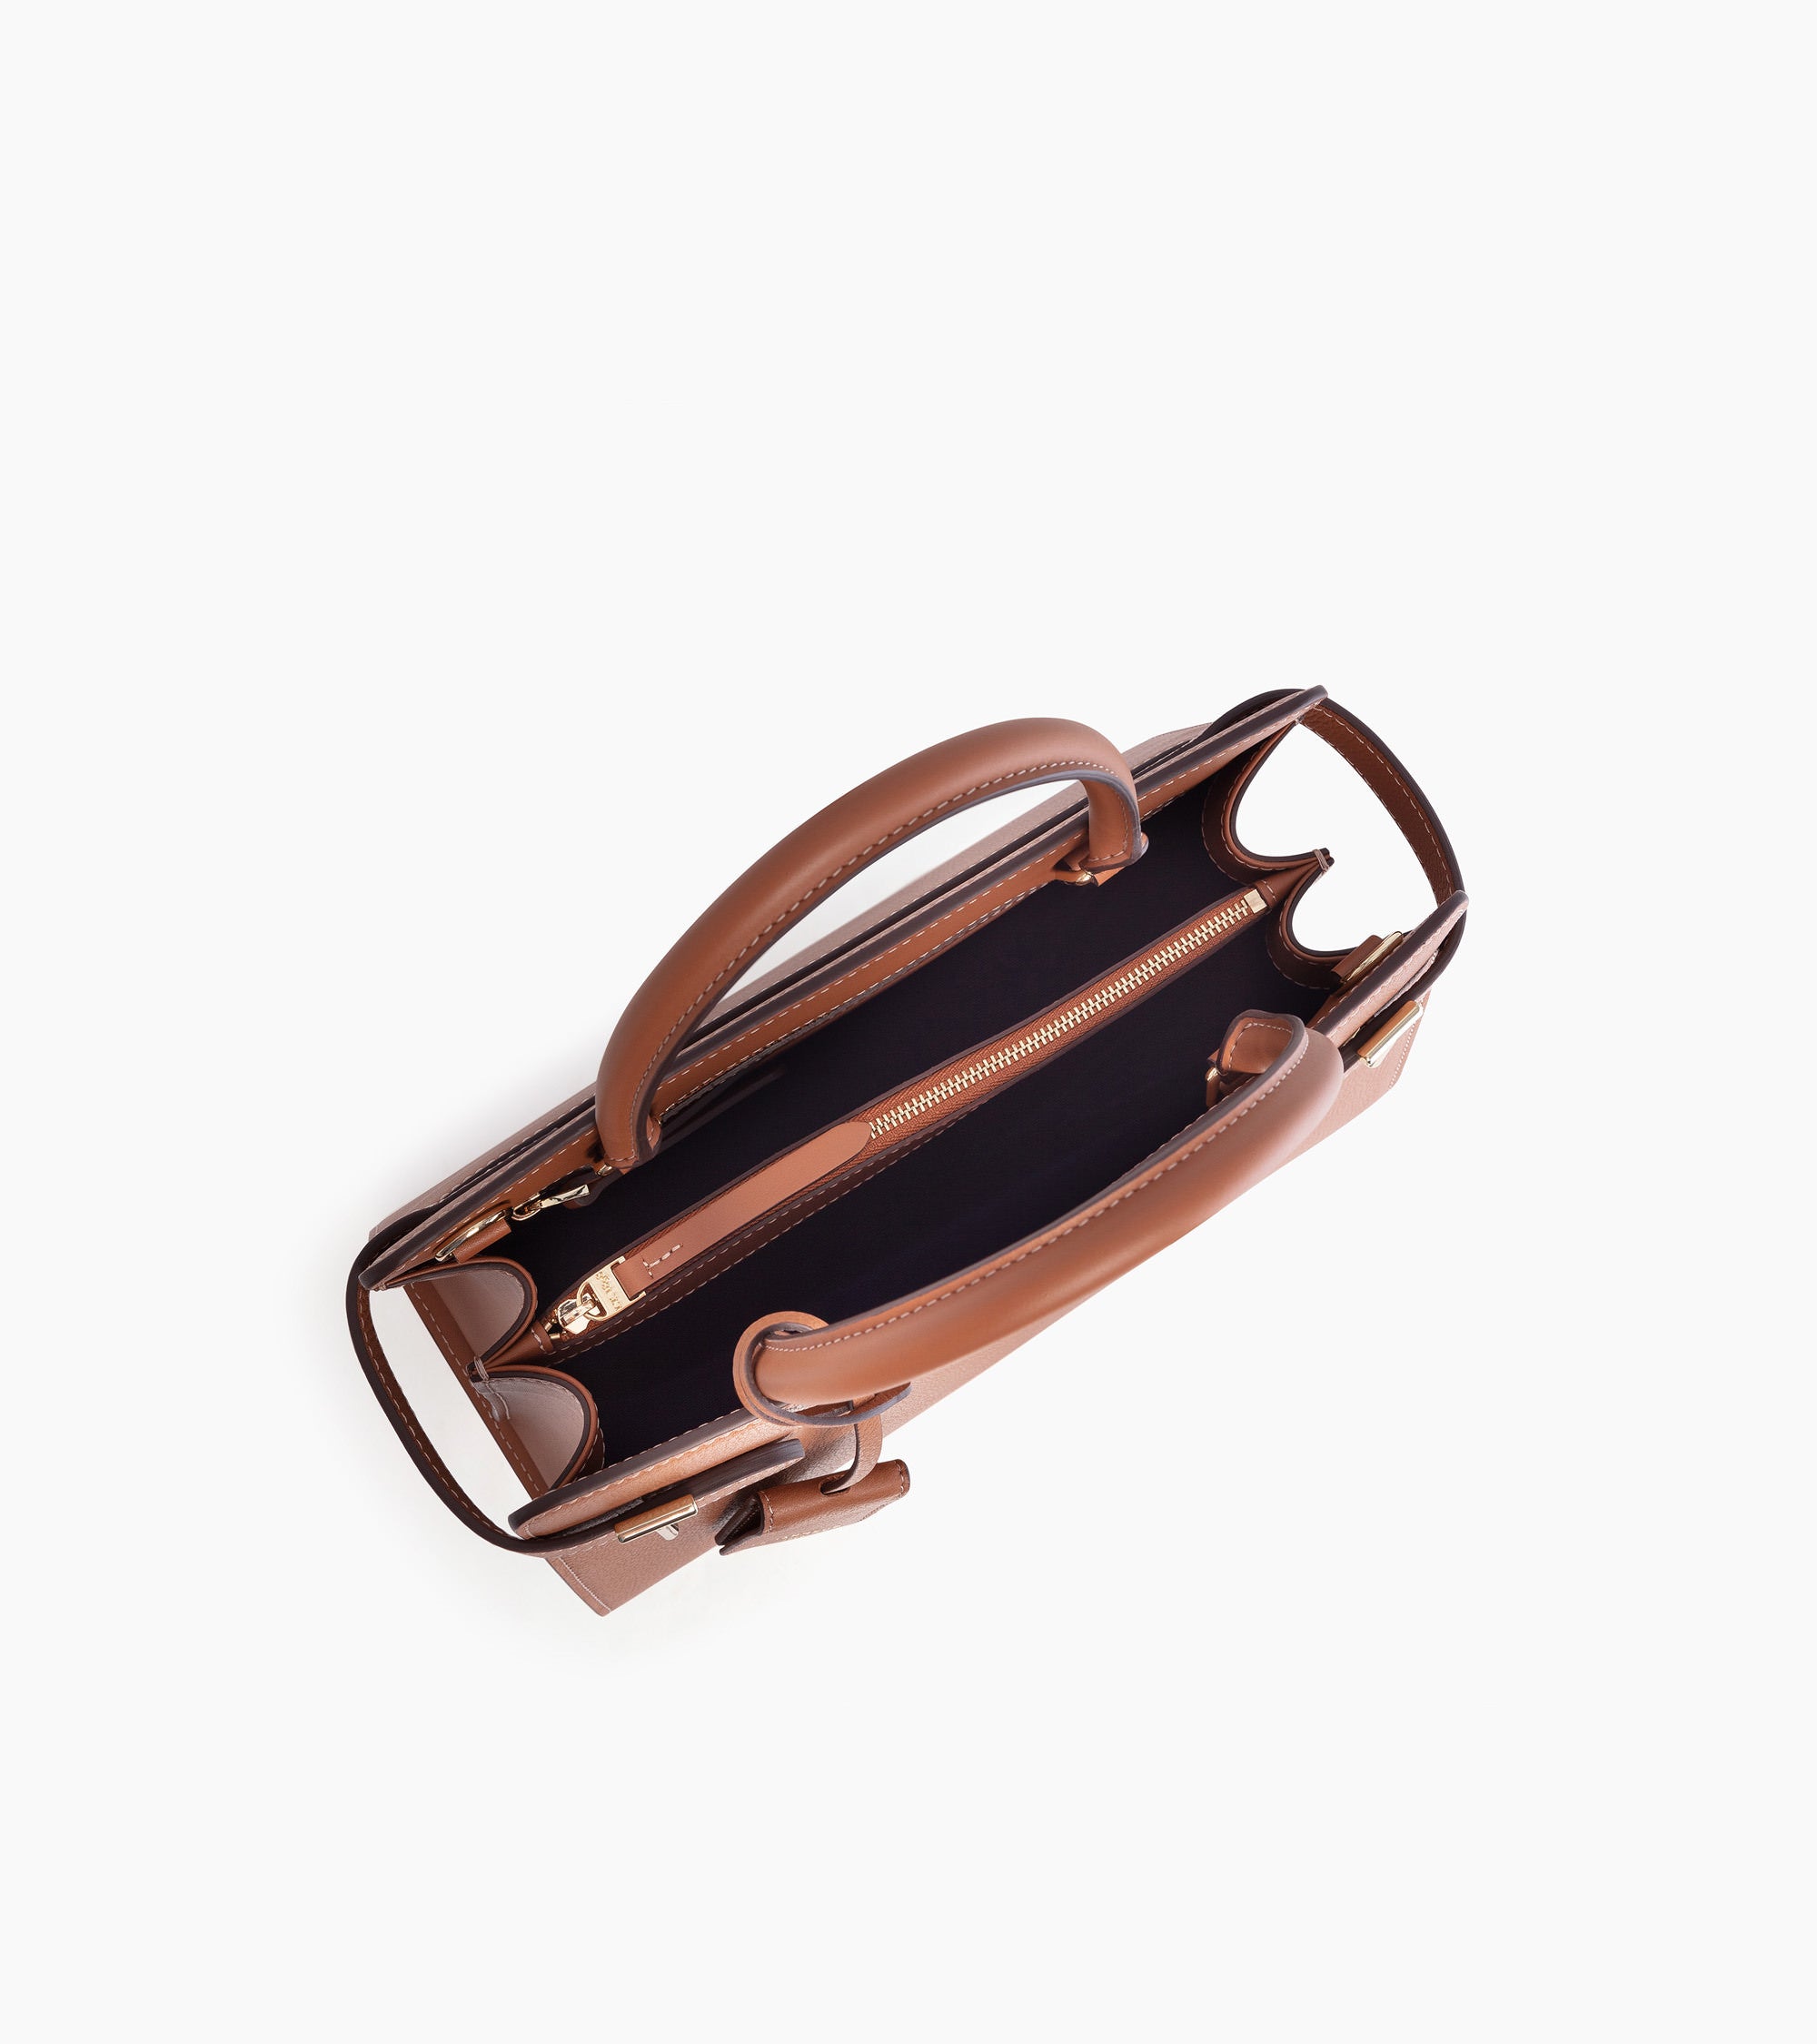 Emilie medium-sized handbag in grained leather